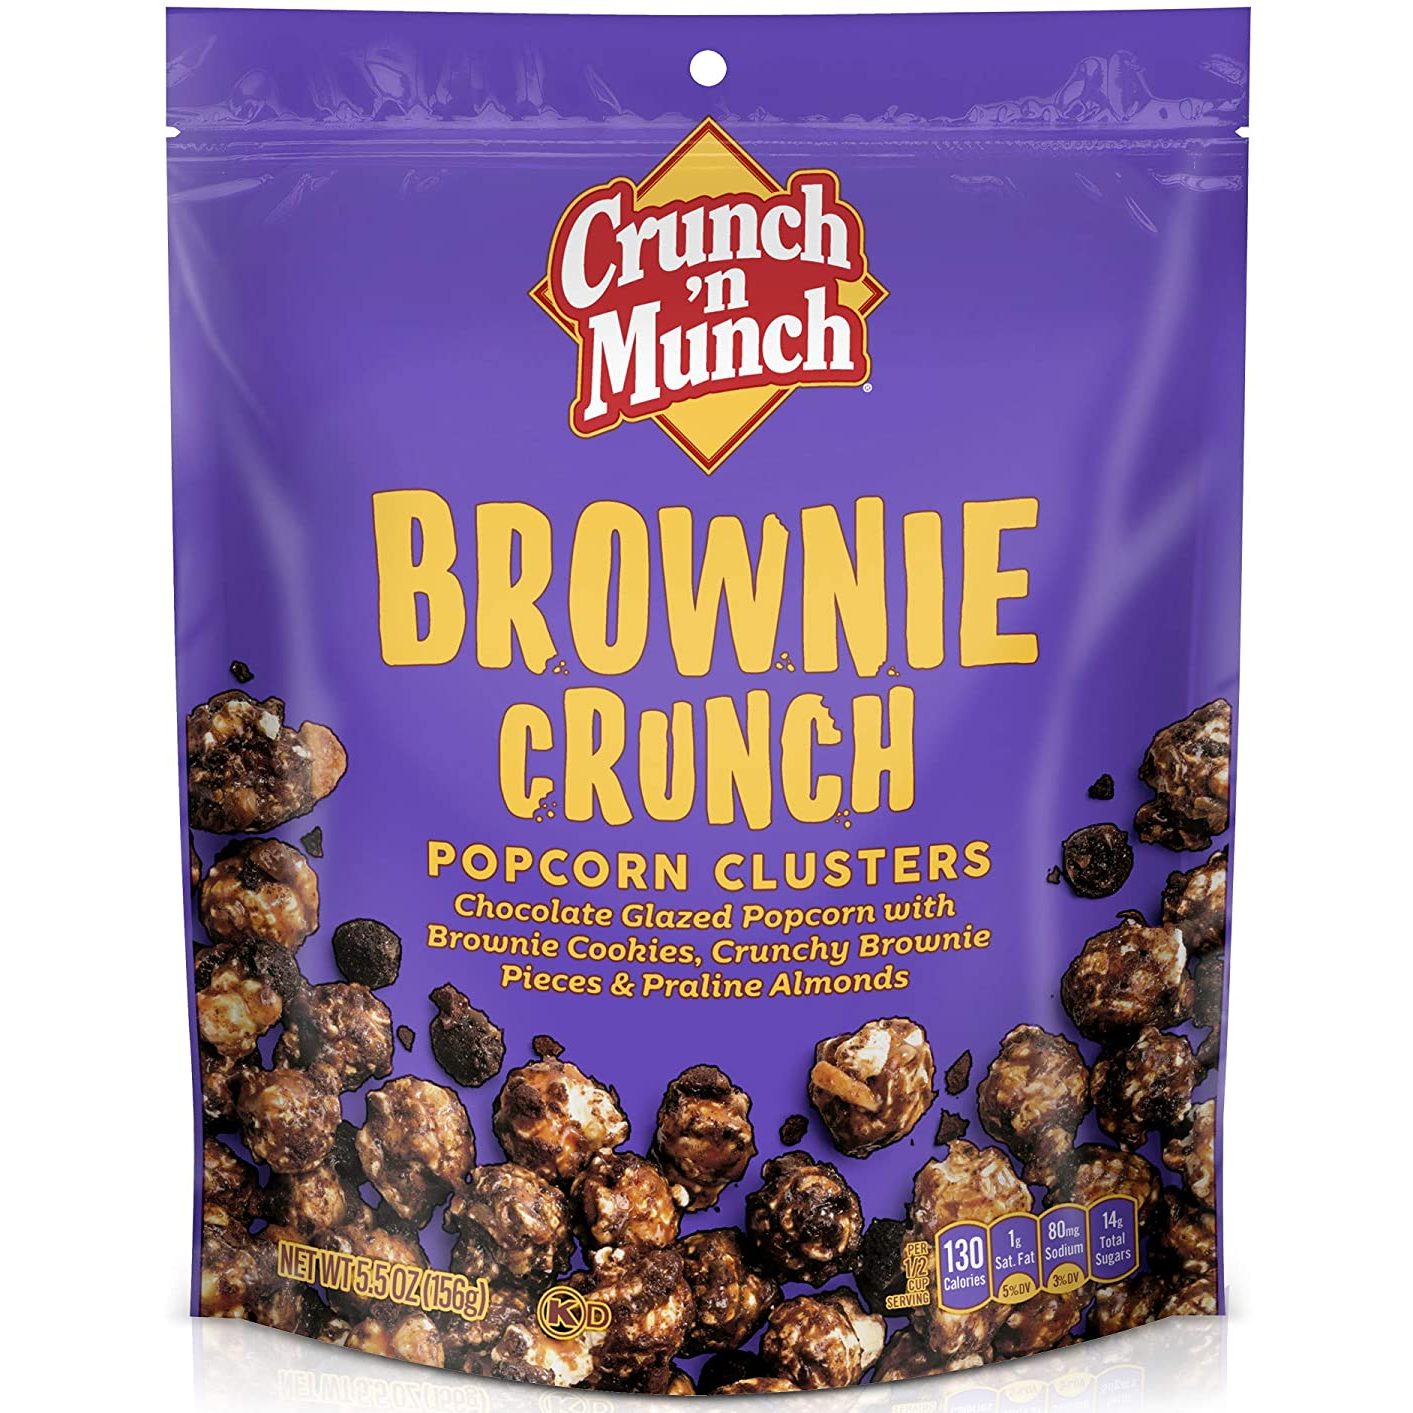 Crunch ‘n’ Munch Brownie Crunch Popcorn Clusters 156g